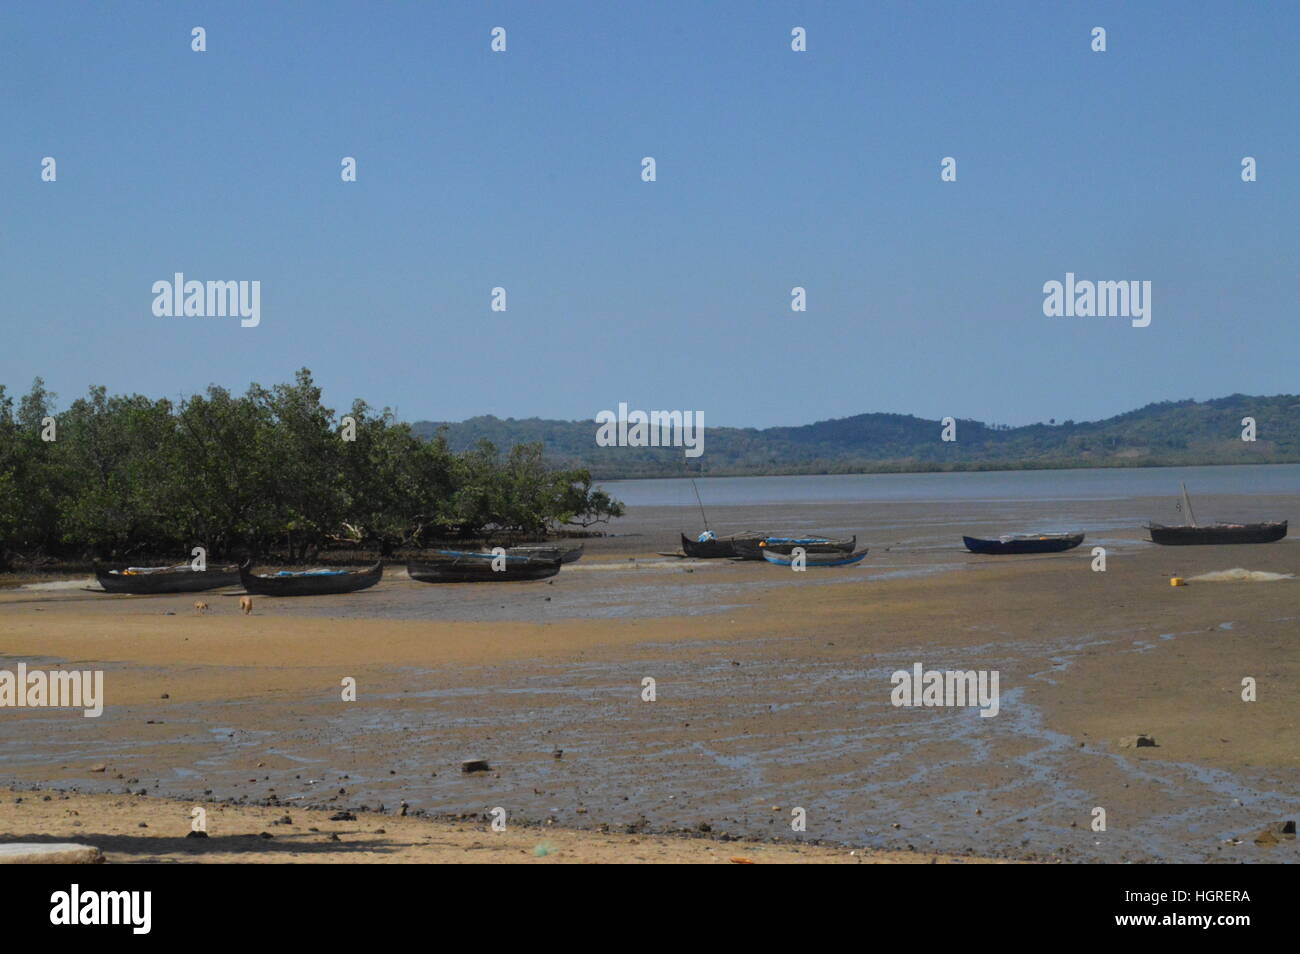 Pirogues lying idle on the shores of Ambatozavavay in Nosy Be, Madagascar Stock Photo